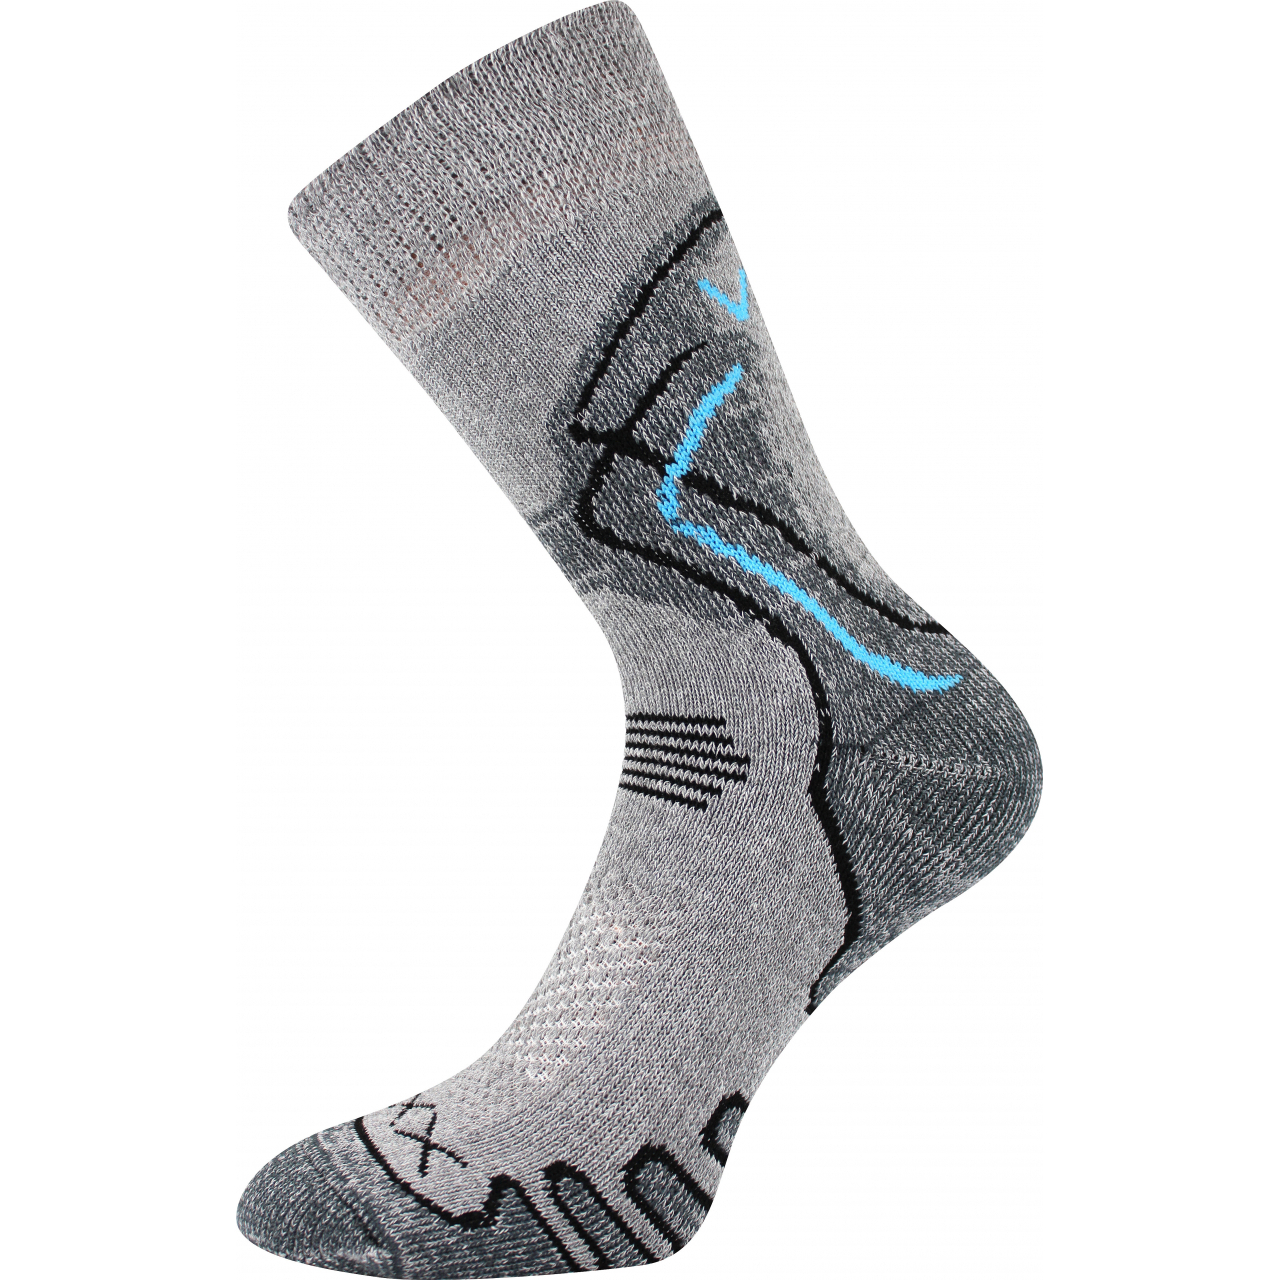 Ponožky trekingové unisex Voxx Limit III - šedé, 35-38